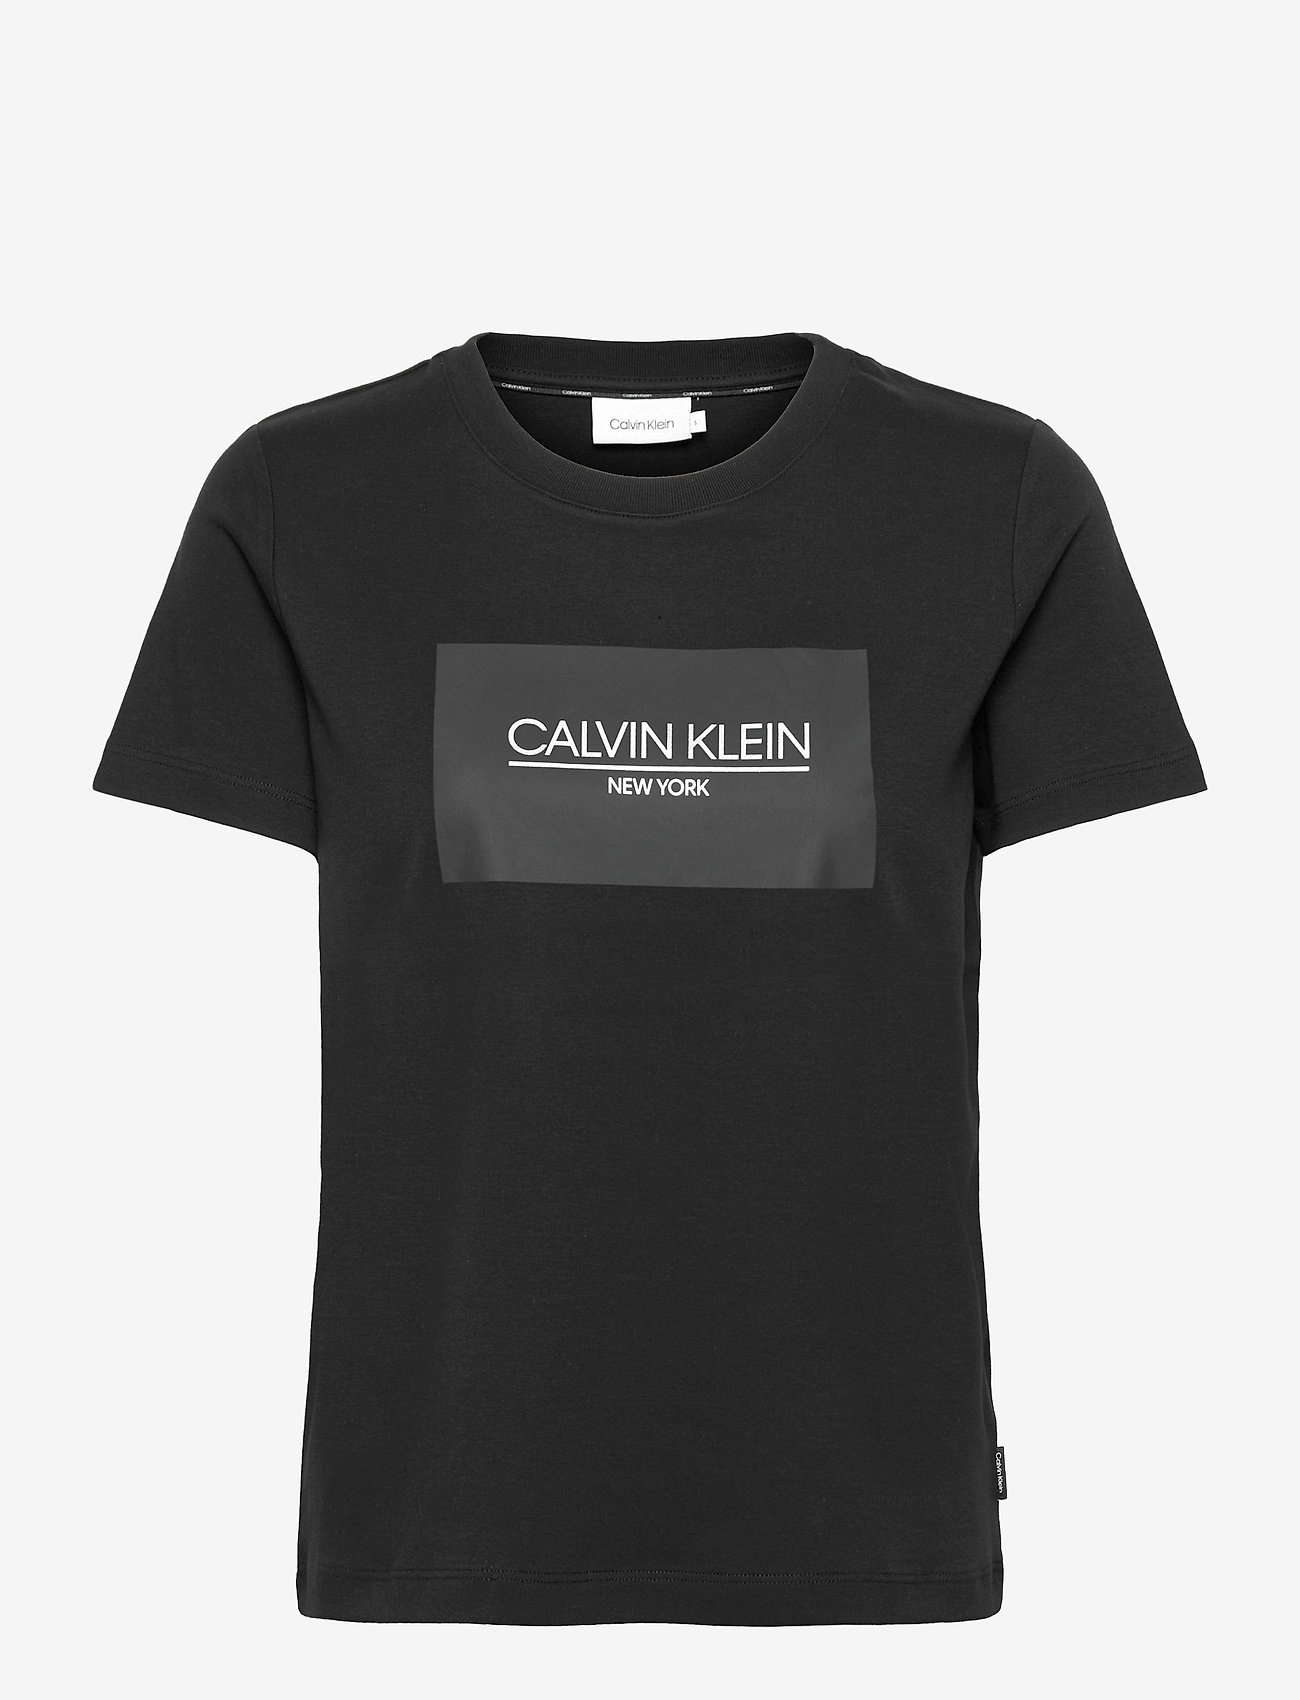 middelen Motel Geld lenende Calvin Klein Ck New York Patch T-shirt - T-shirts | Boozt.com